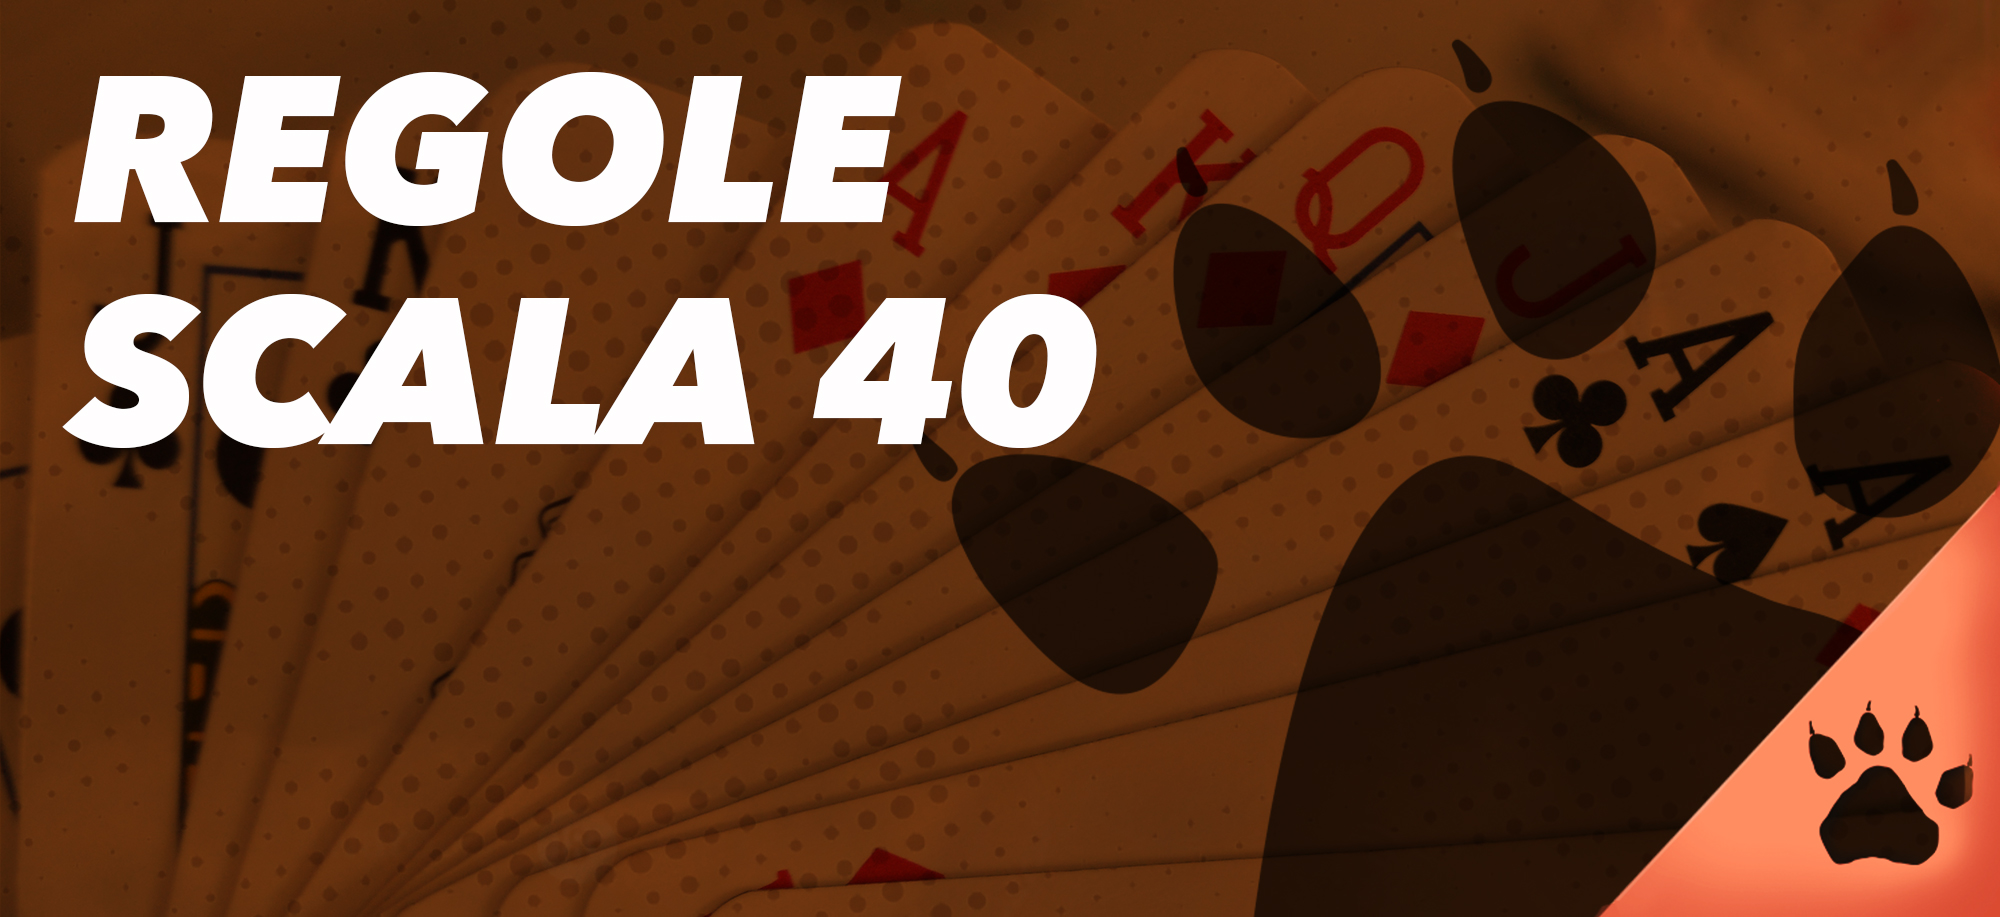 Scala 40 - Tutte le regole (Guida aggiornata al 2022) | News & Blog LeoVegas Casinò